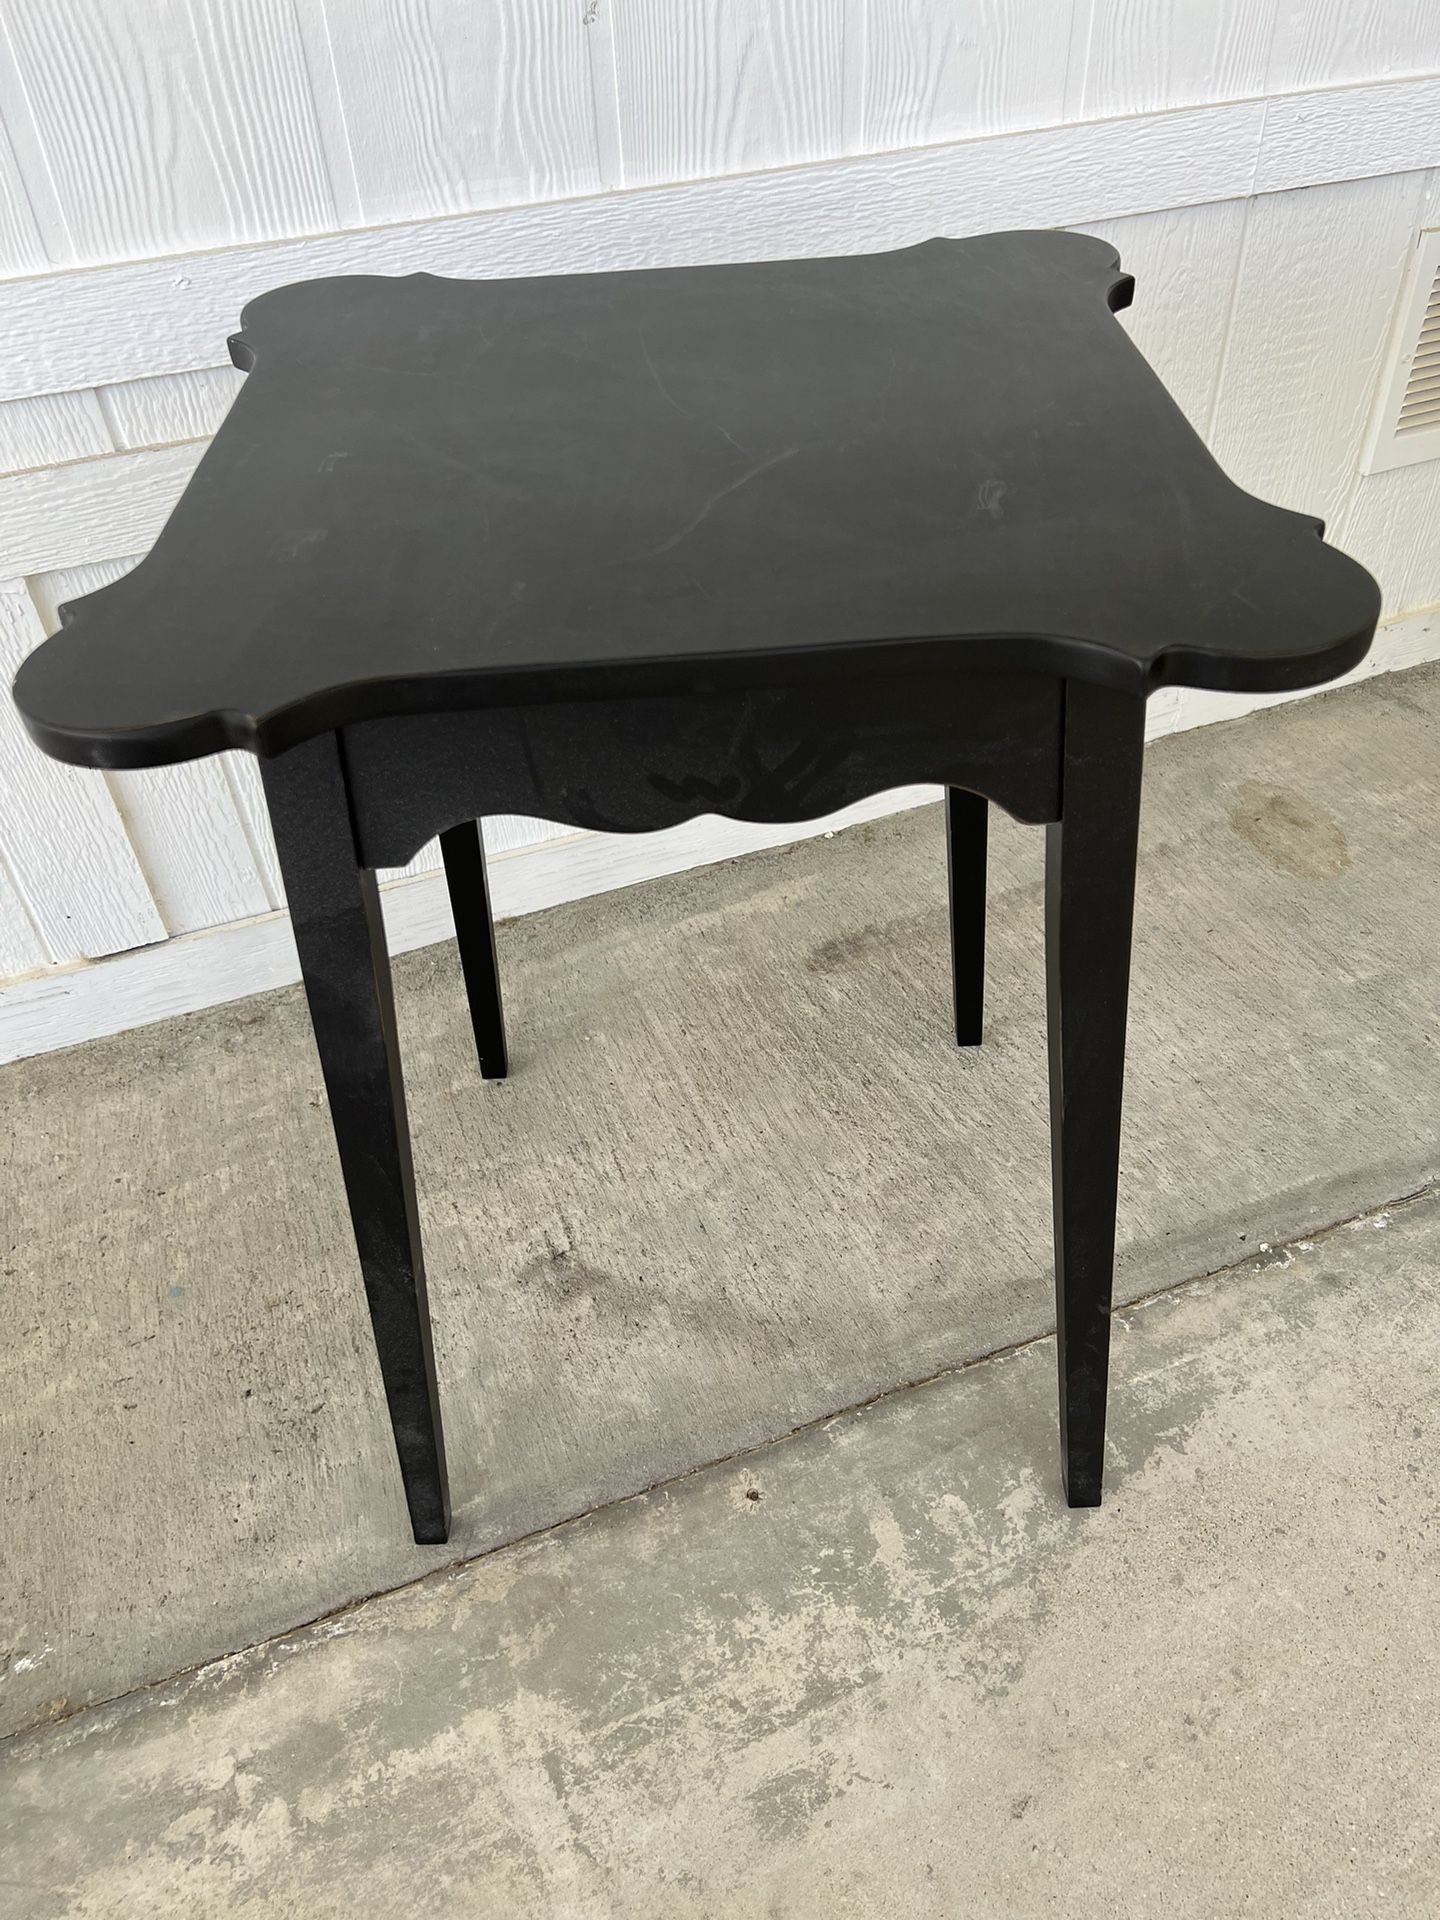 SIDE TABLE (BLACK)… $45